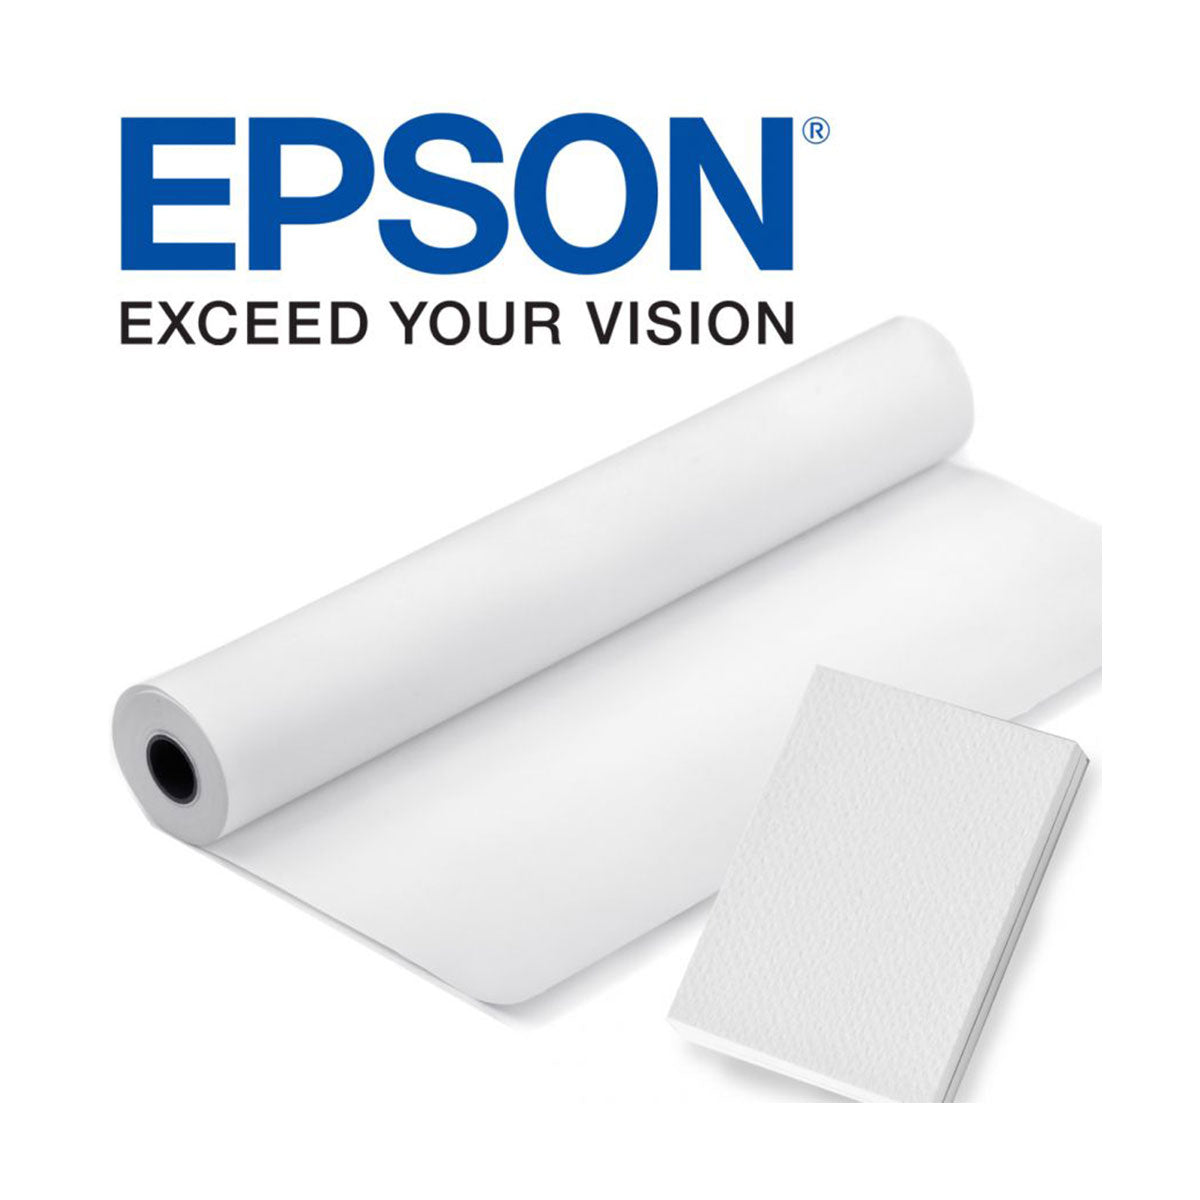 Epson Enhanced Matte Paper 24"x100' Roll